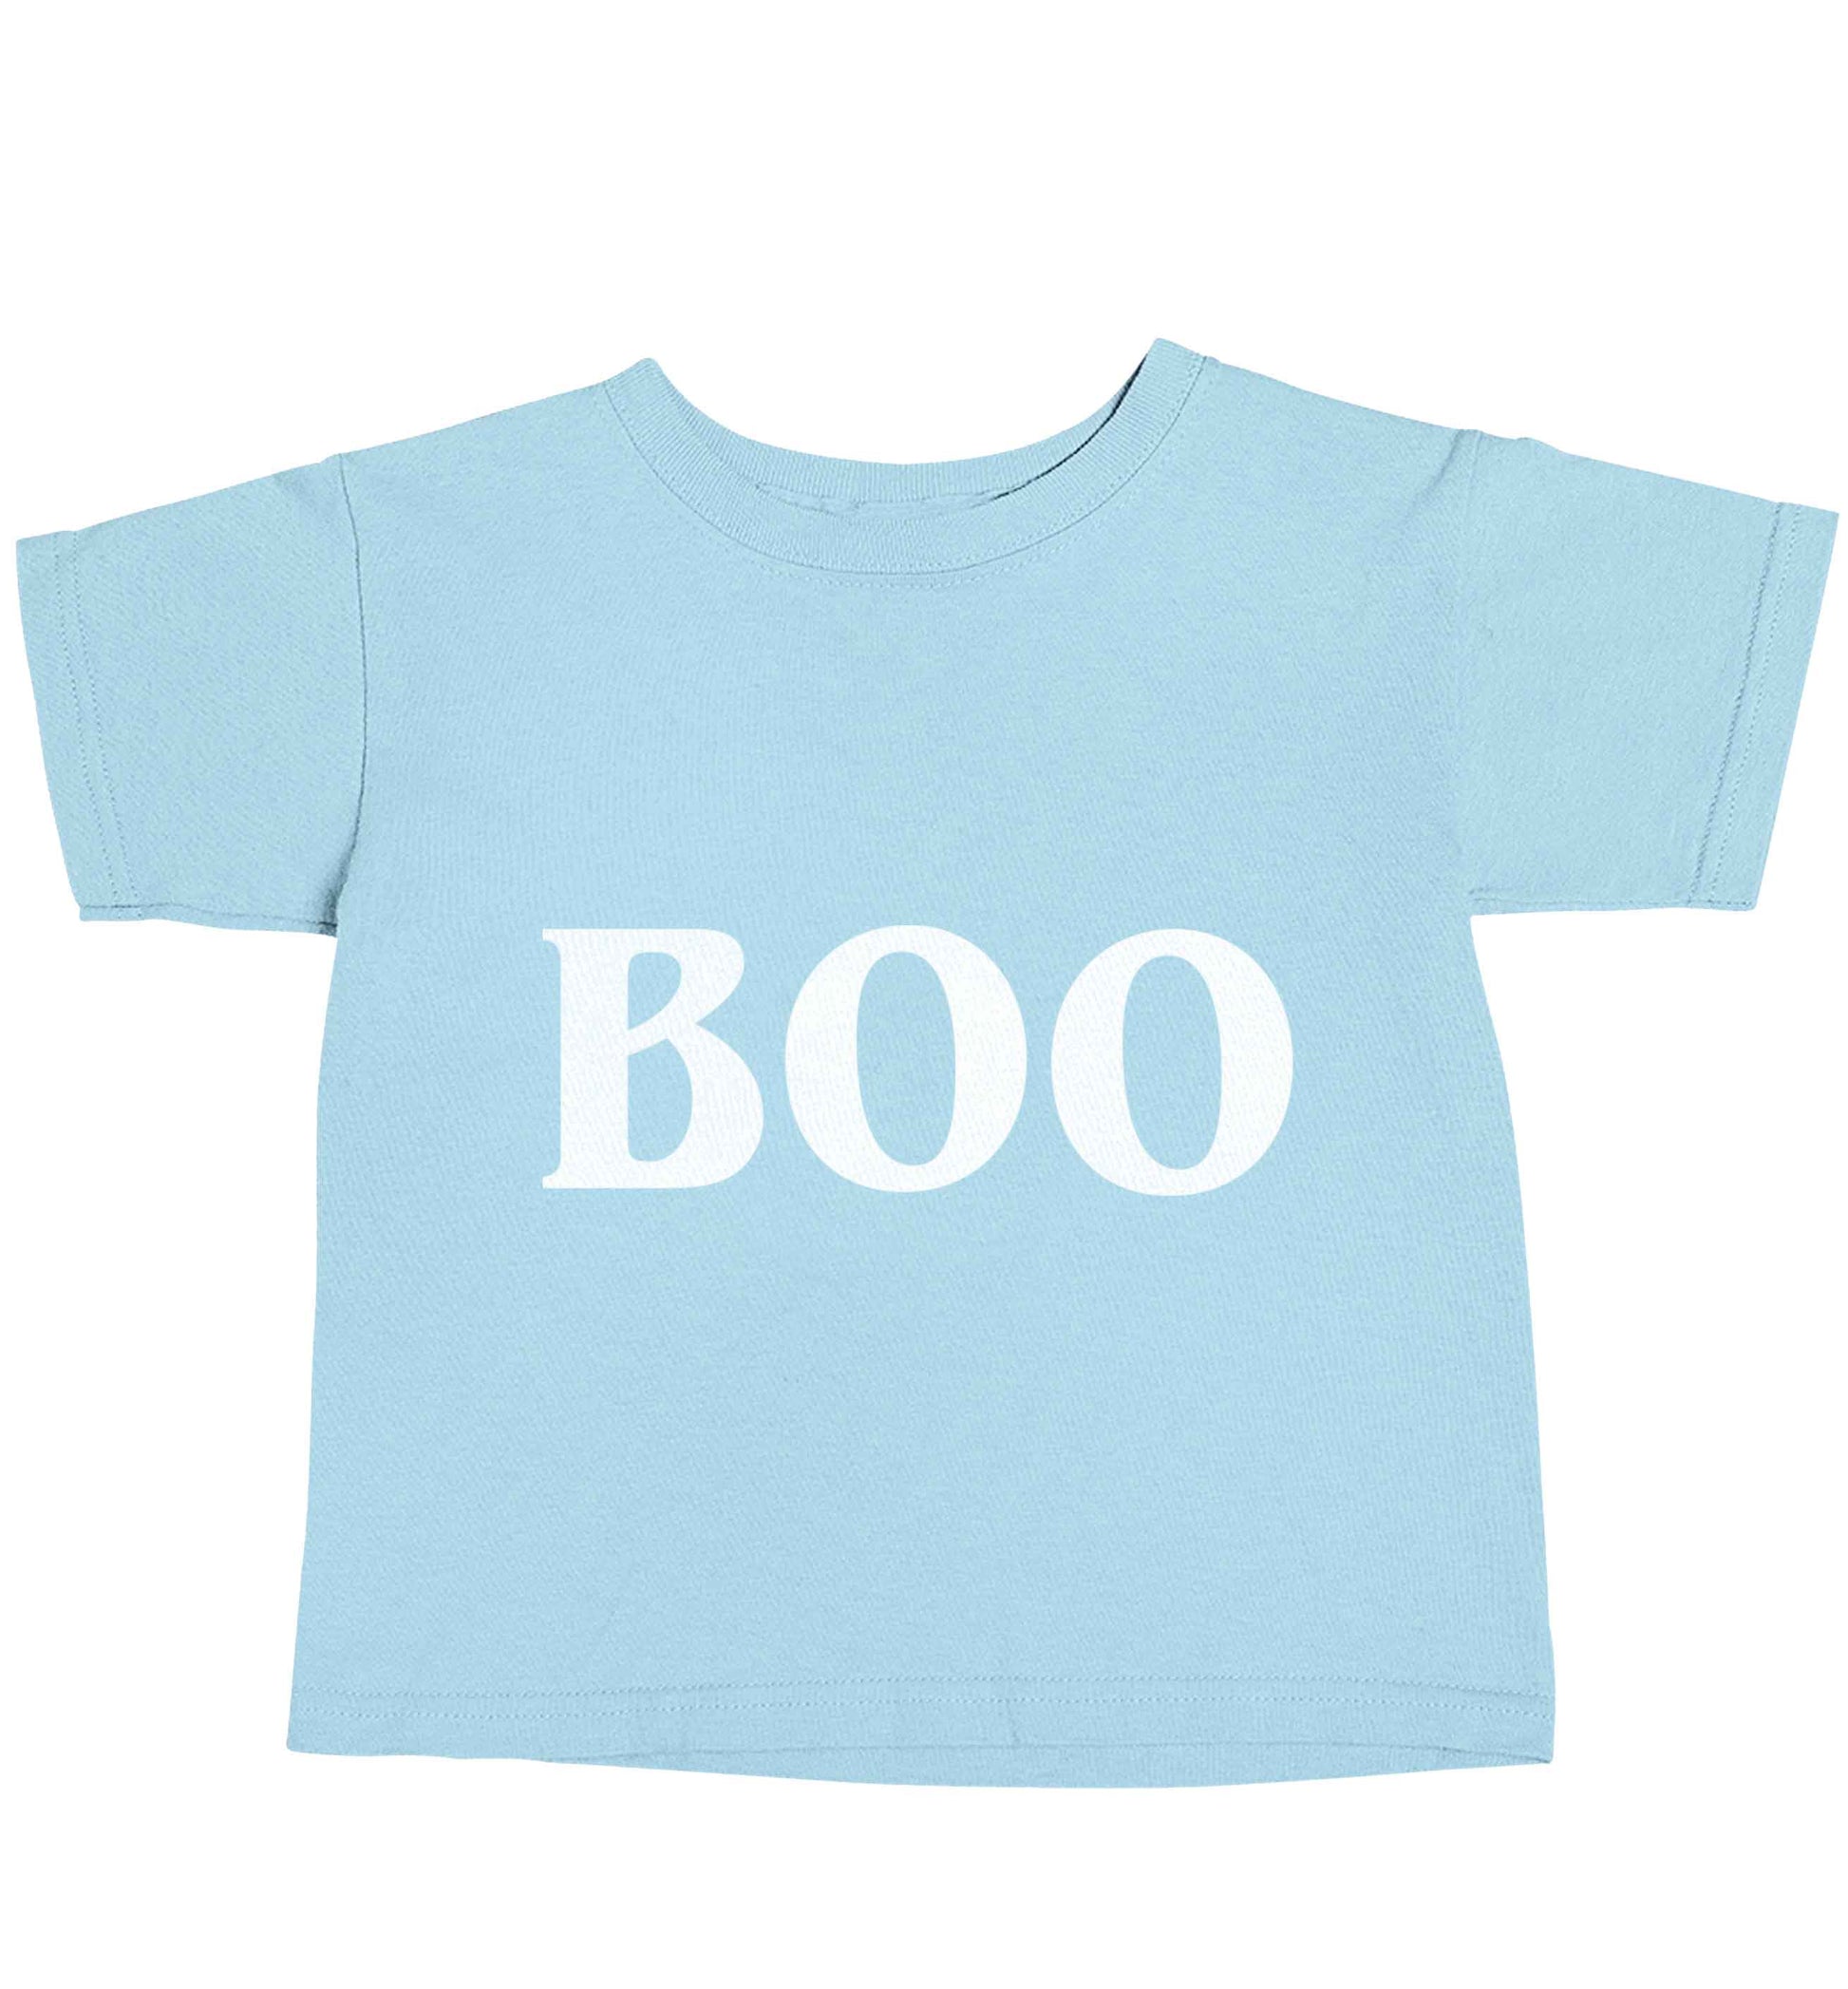 Boo light blue baby toddler Tshirt 2 Years